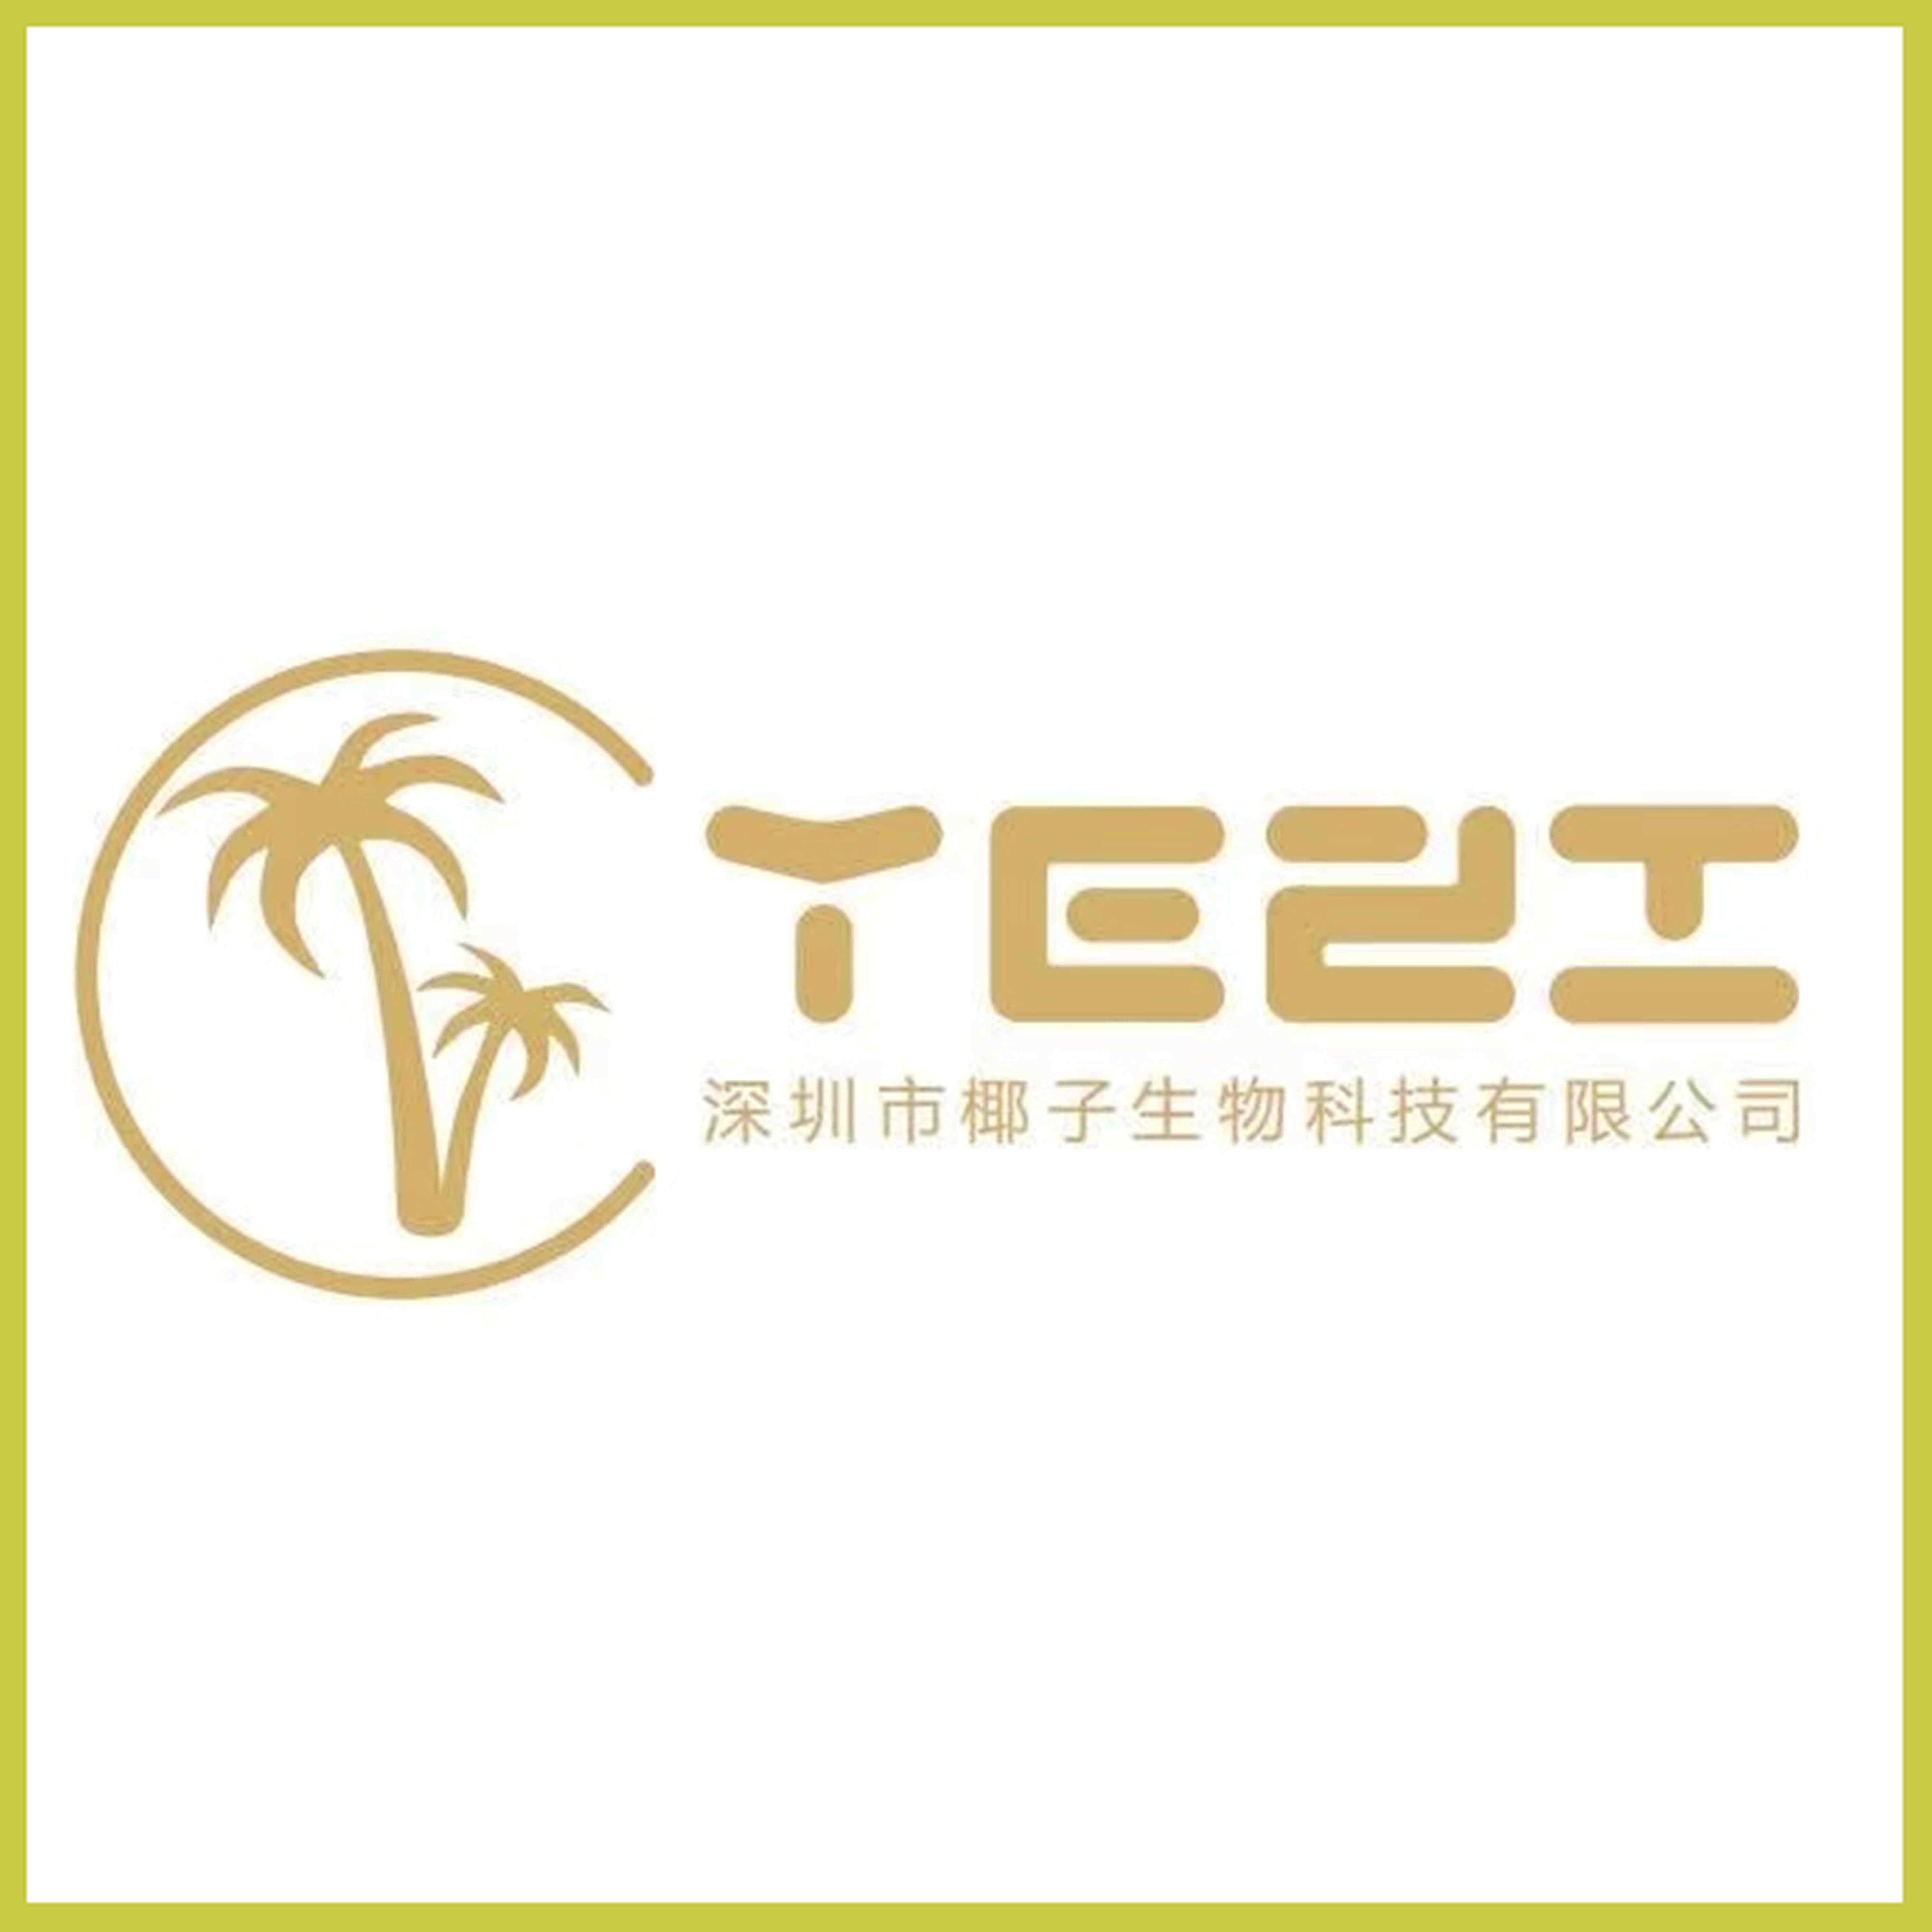 YEZI Bio-Technique Co., Ltd.